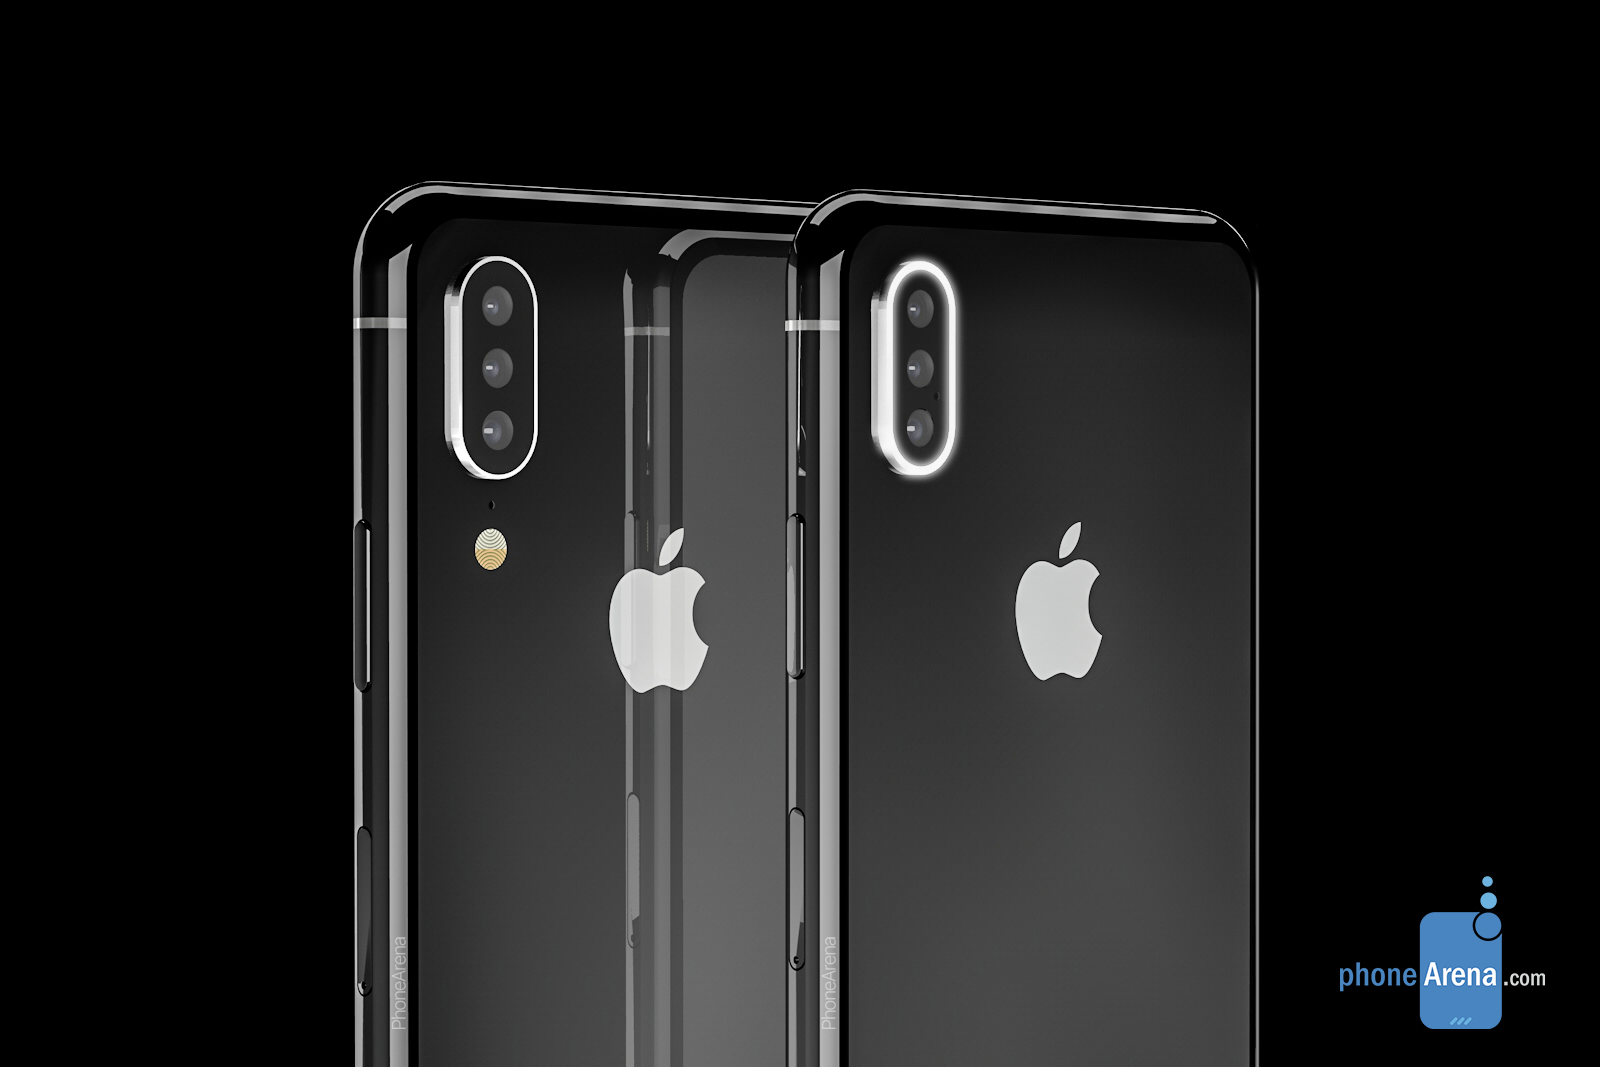 ios 13 dark mode, chế độ tối toàn hệ thống ios 13, iphone xi concept, bản dựng iphone 11 2019, dark mode iphone 2019, iphone 3 camera, chi tiết iphone xi 2019, thông tin iphone mới, kế hoạch 2019 apple, ios dark mode, nền tối ios 13